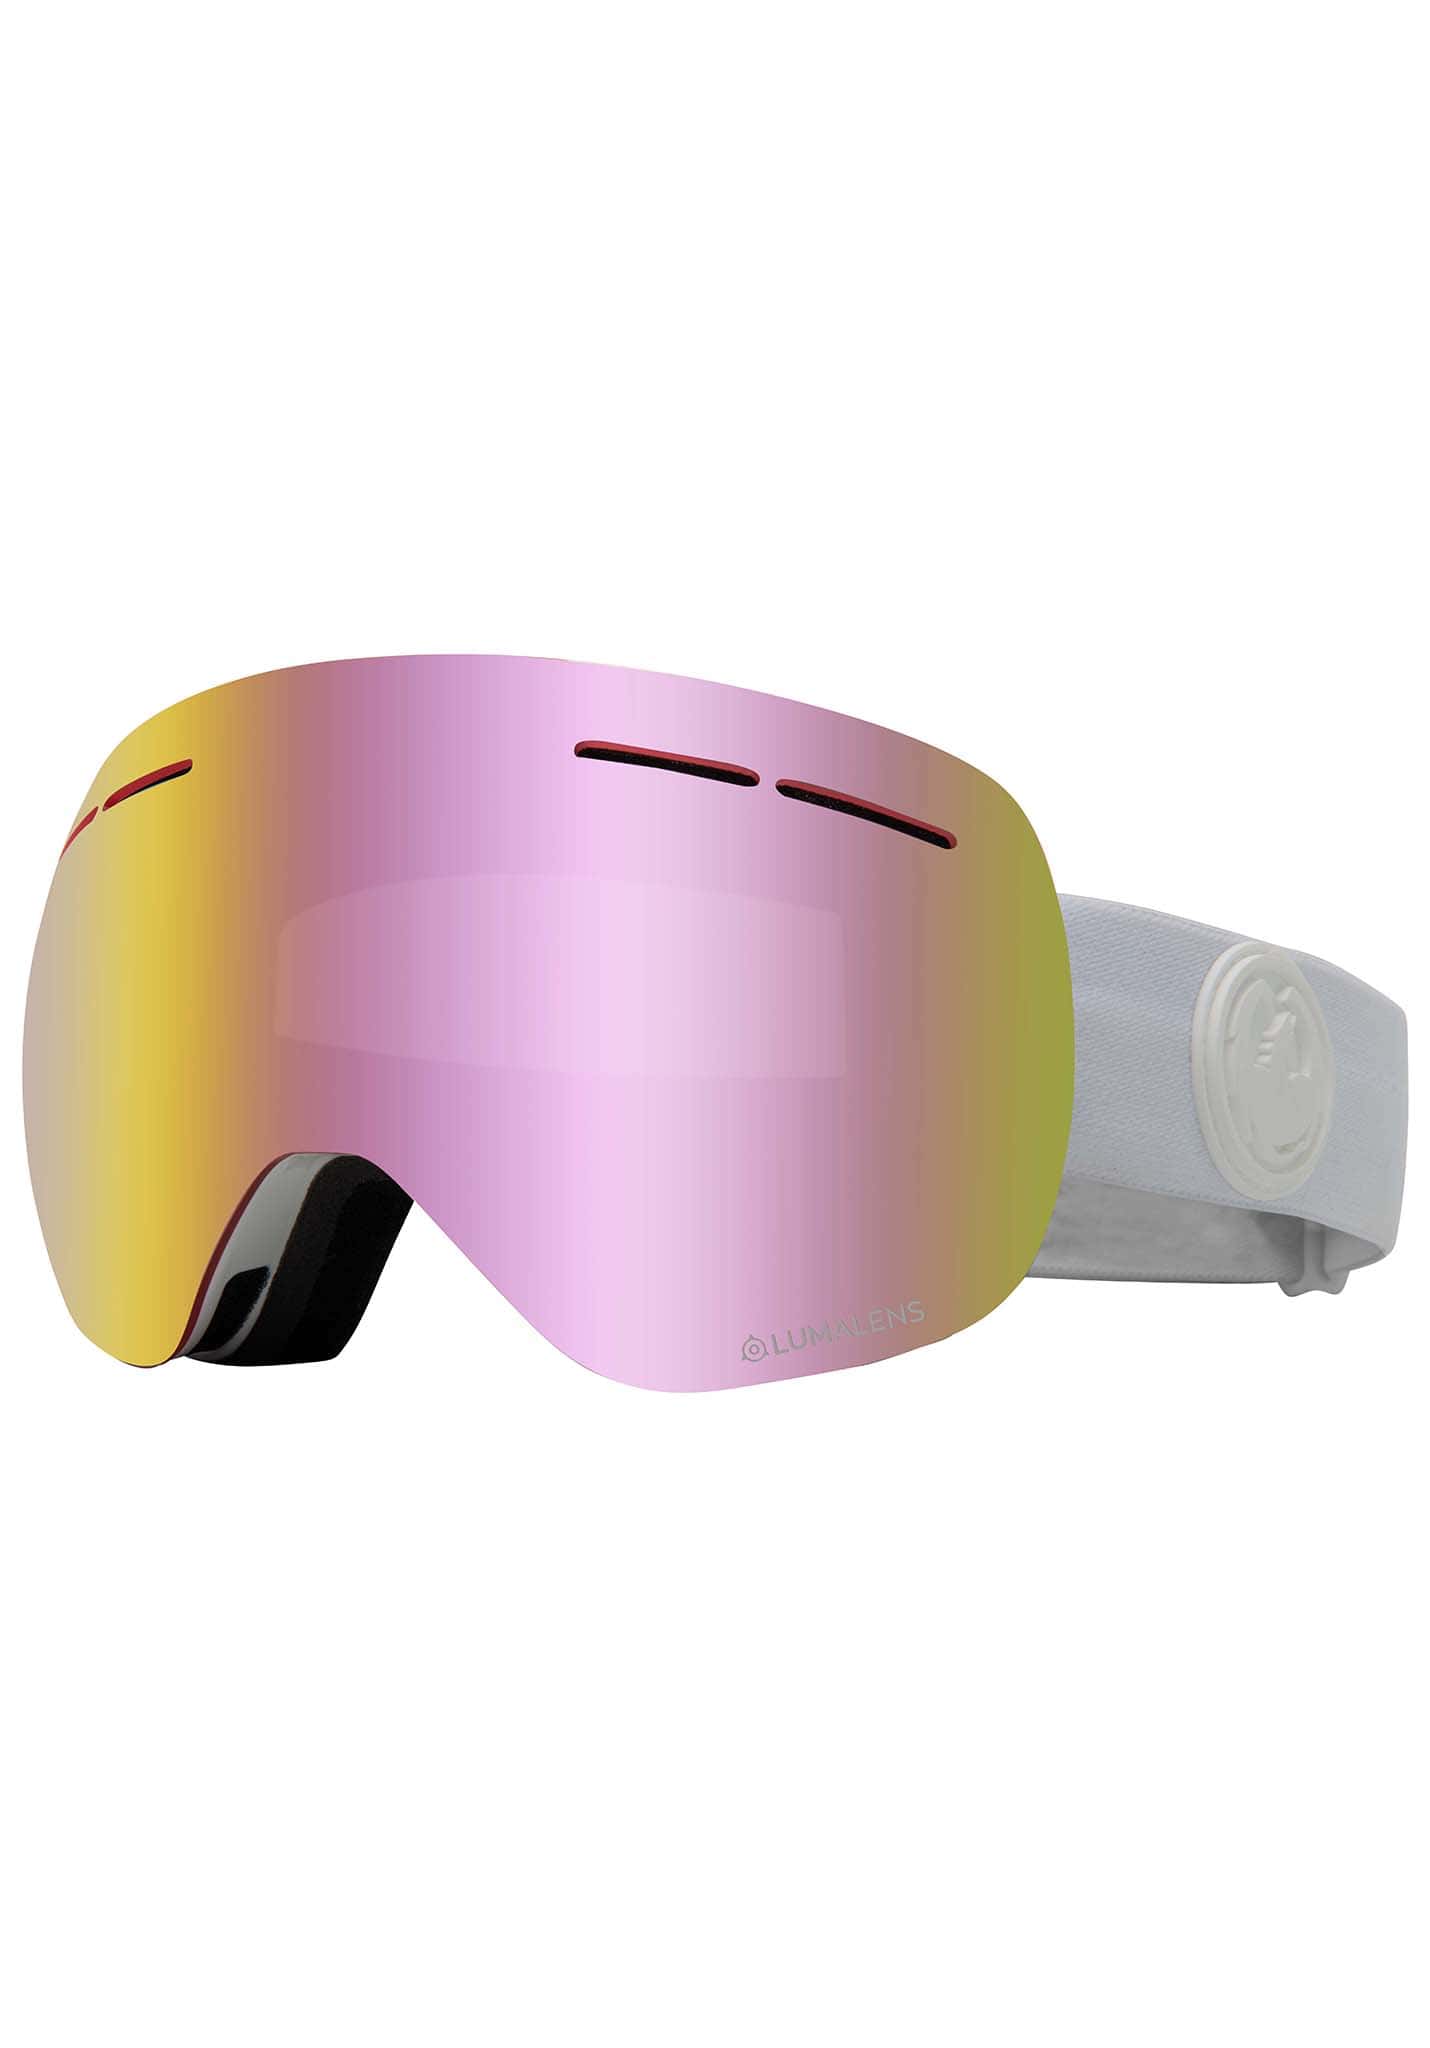 Dragon X1s Snowboardbrillen whiteout/ lumalens pink ion + dark smoke One Size